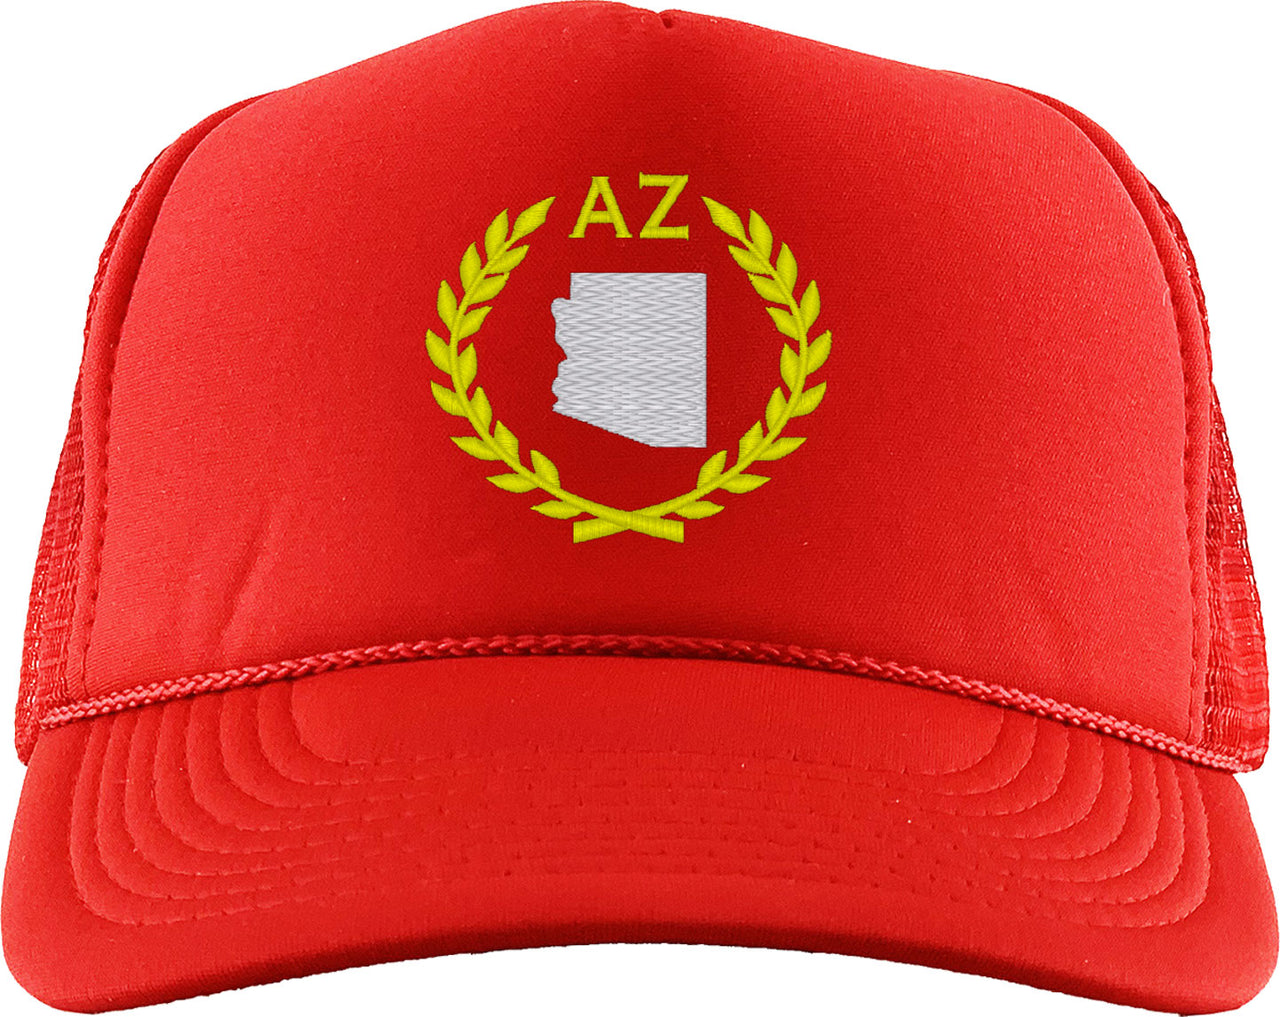 Arizona State Foam Trucker Hat